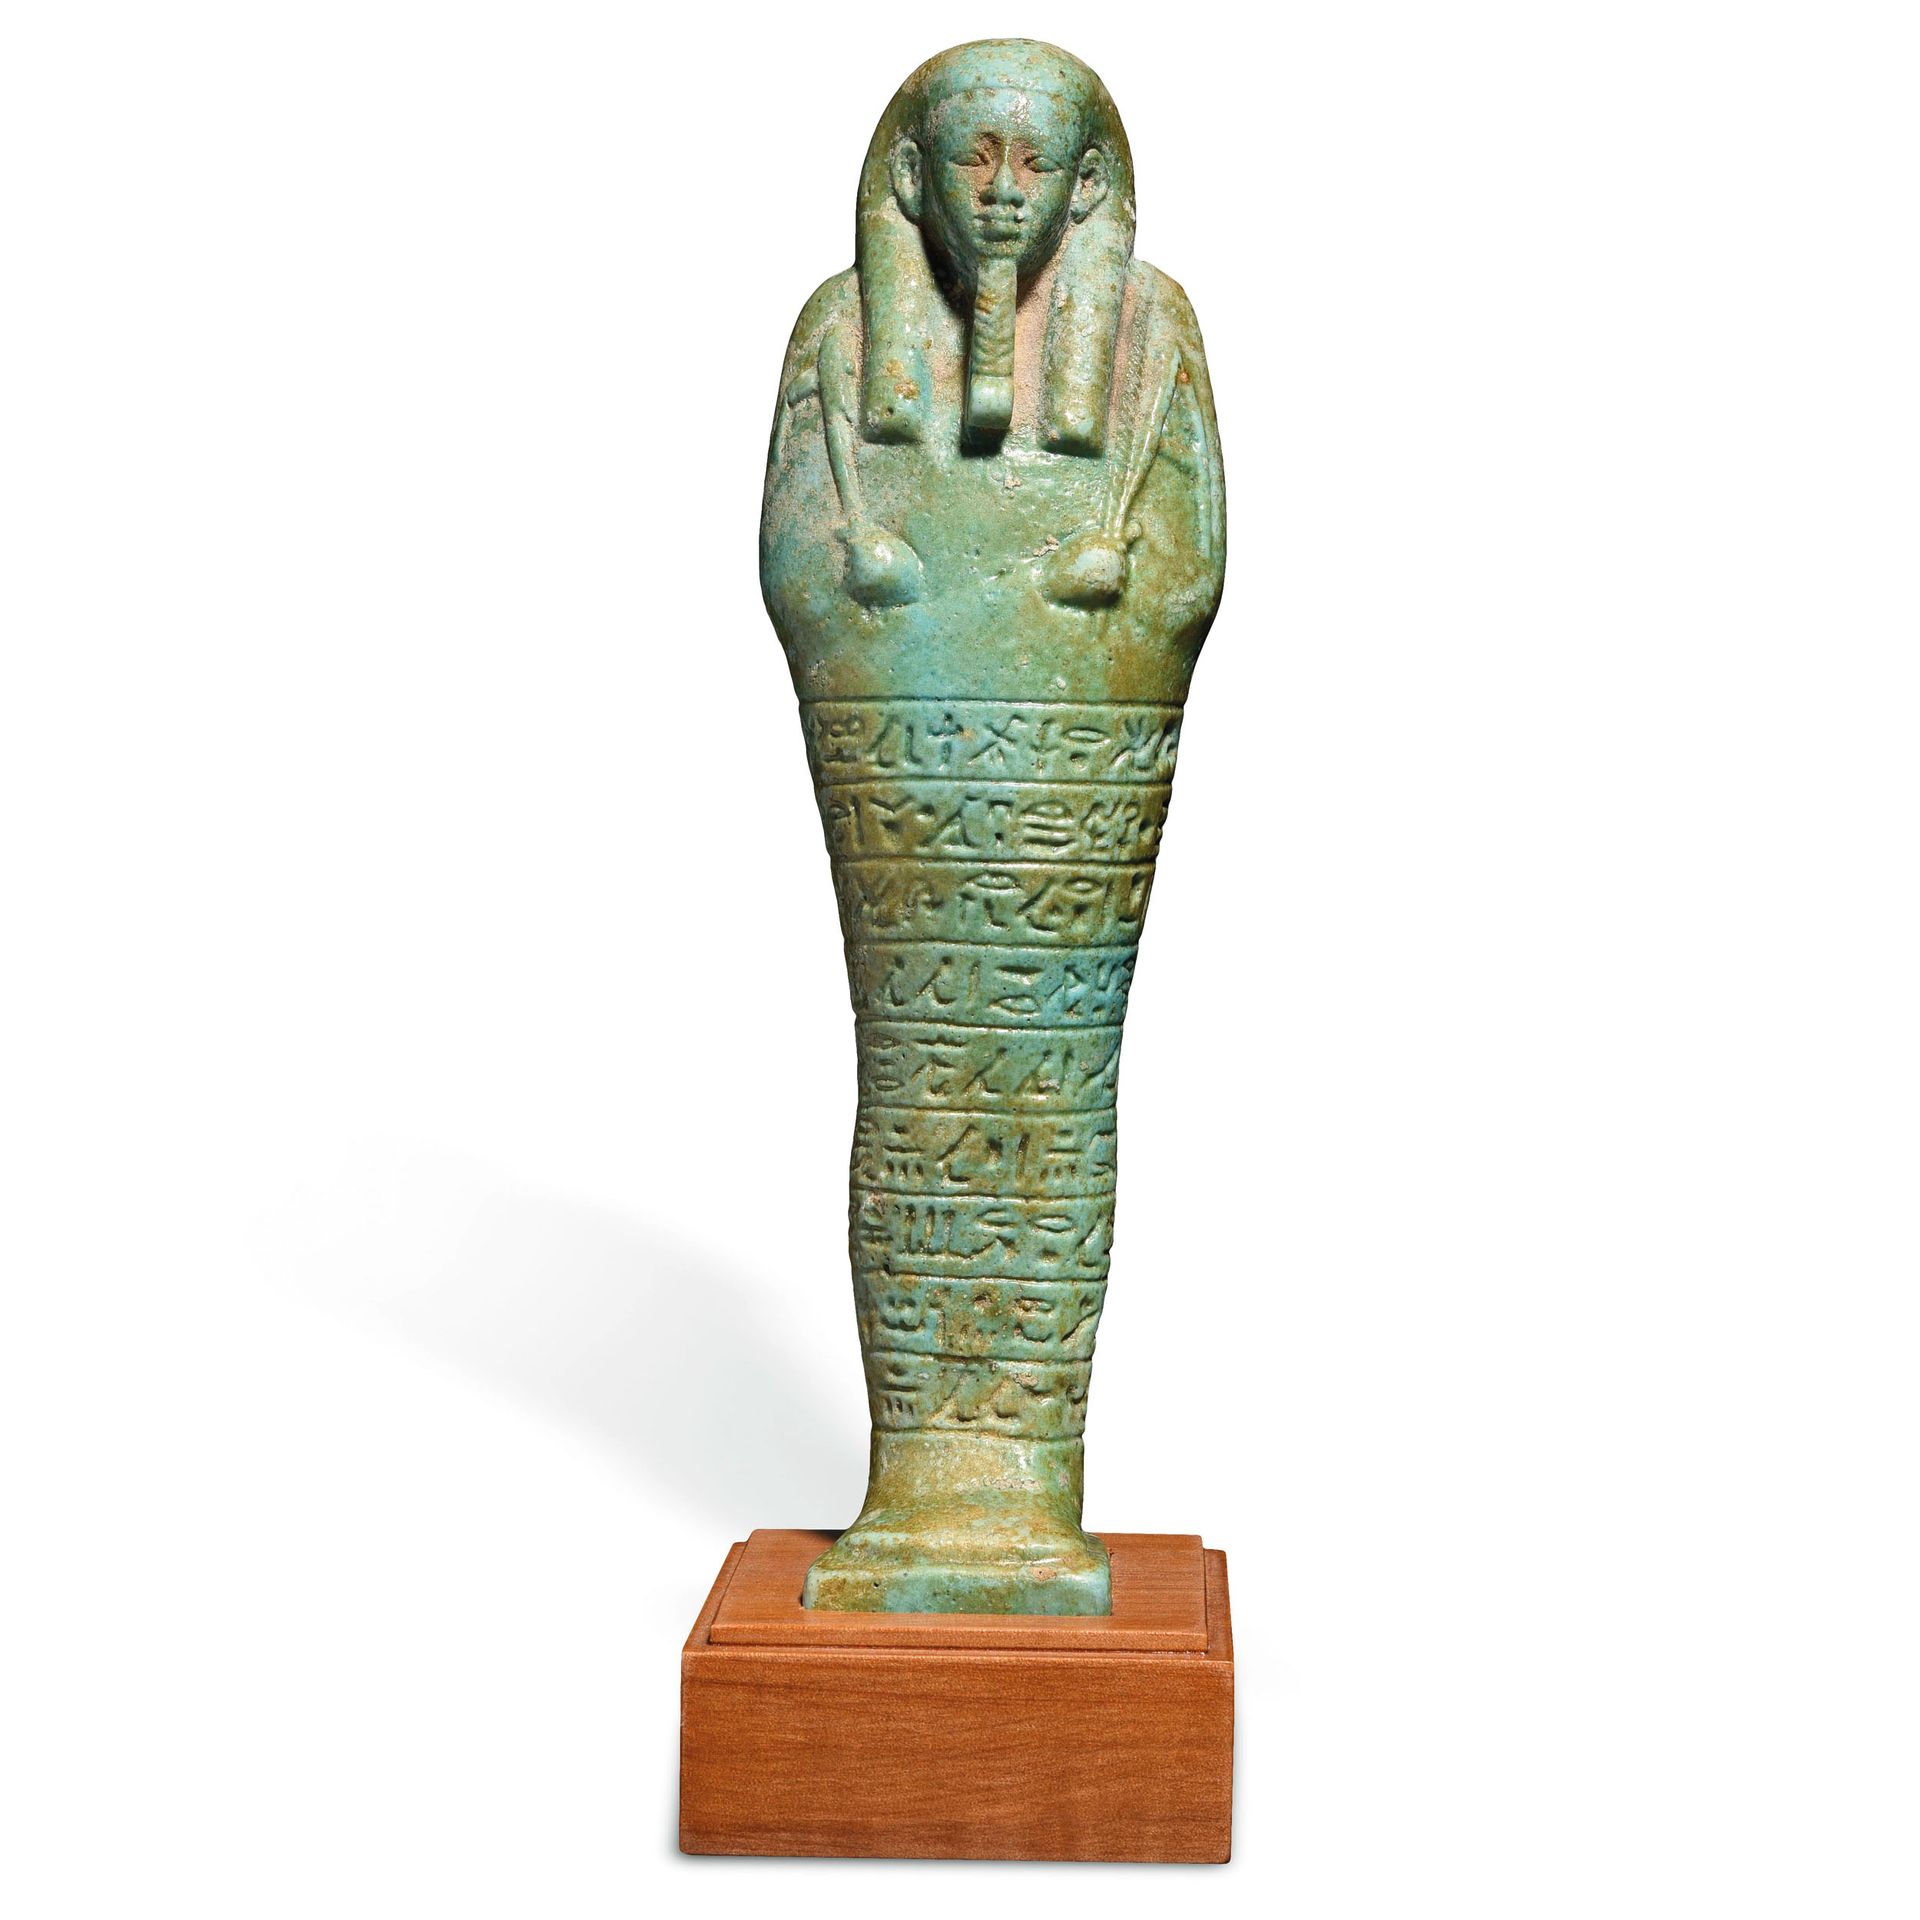 Null OUSHABTI IN THE NAME OF PSAMETIK

Egypt, XXVIth dynasty, 664-525 B.C. 

Sil&hellip;